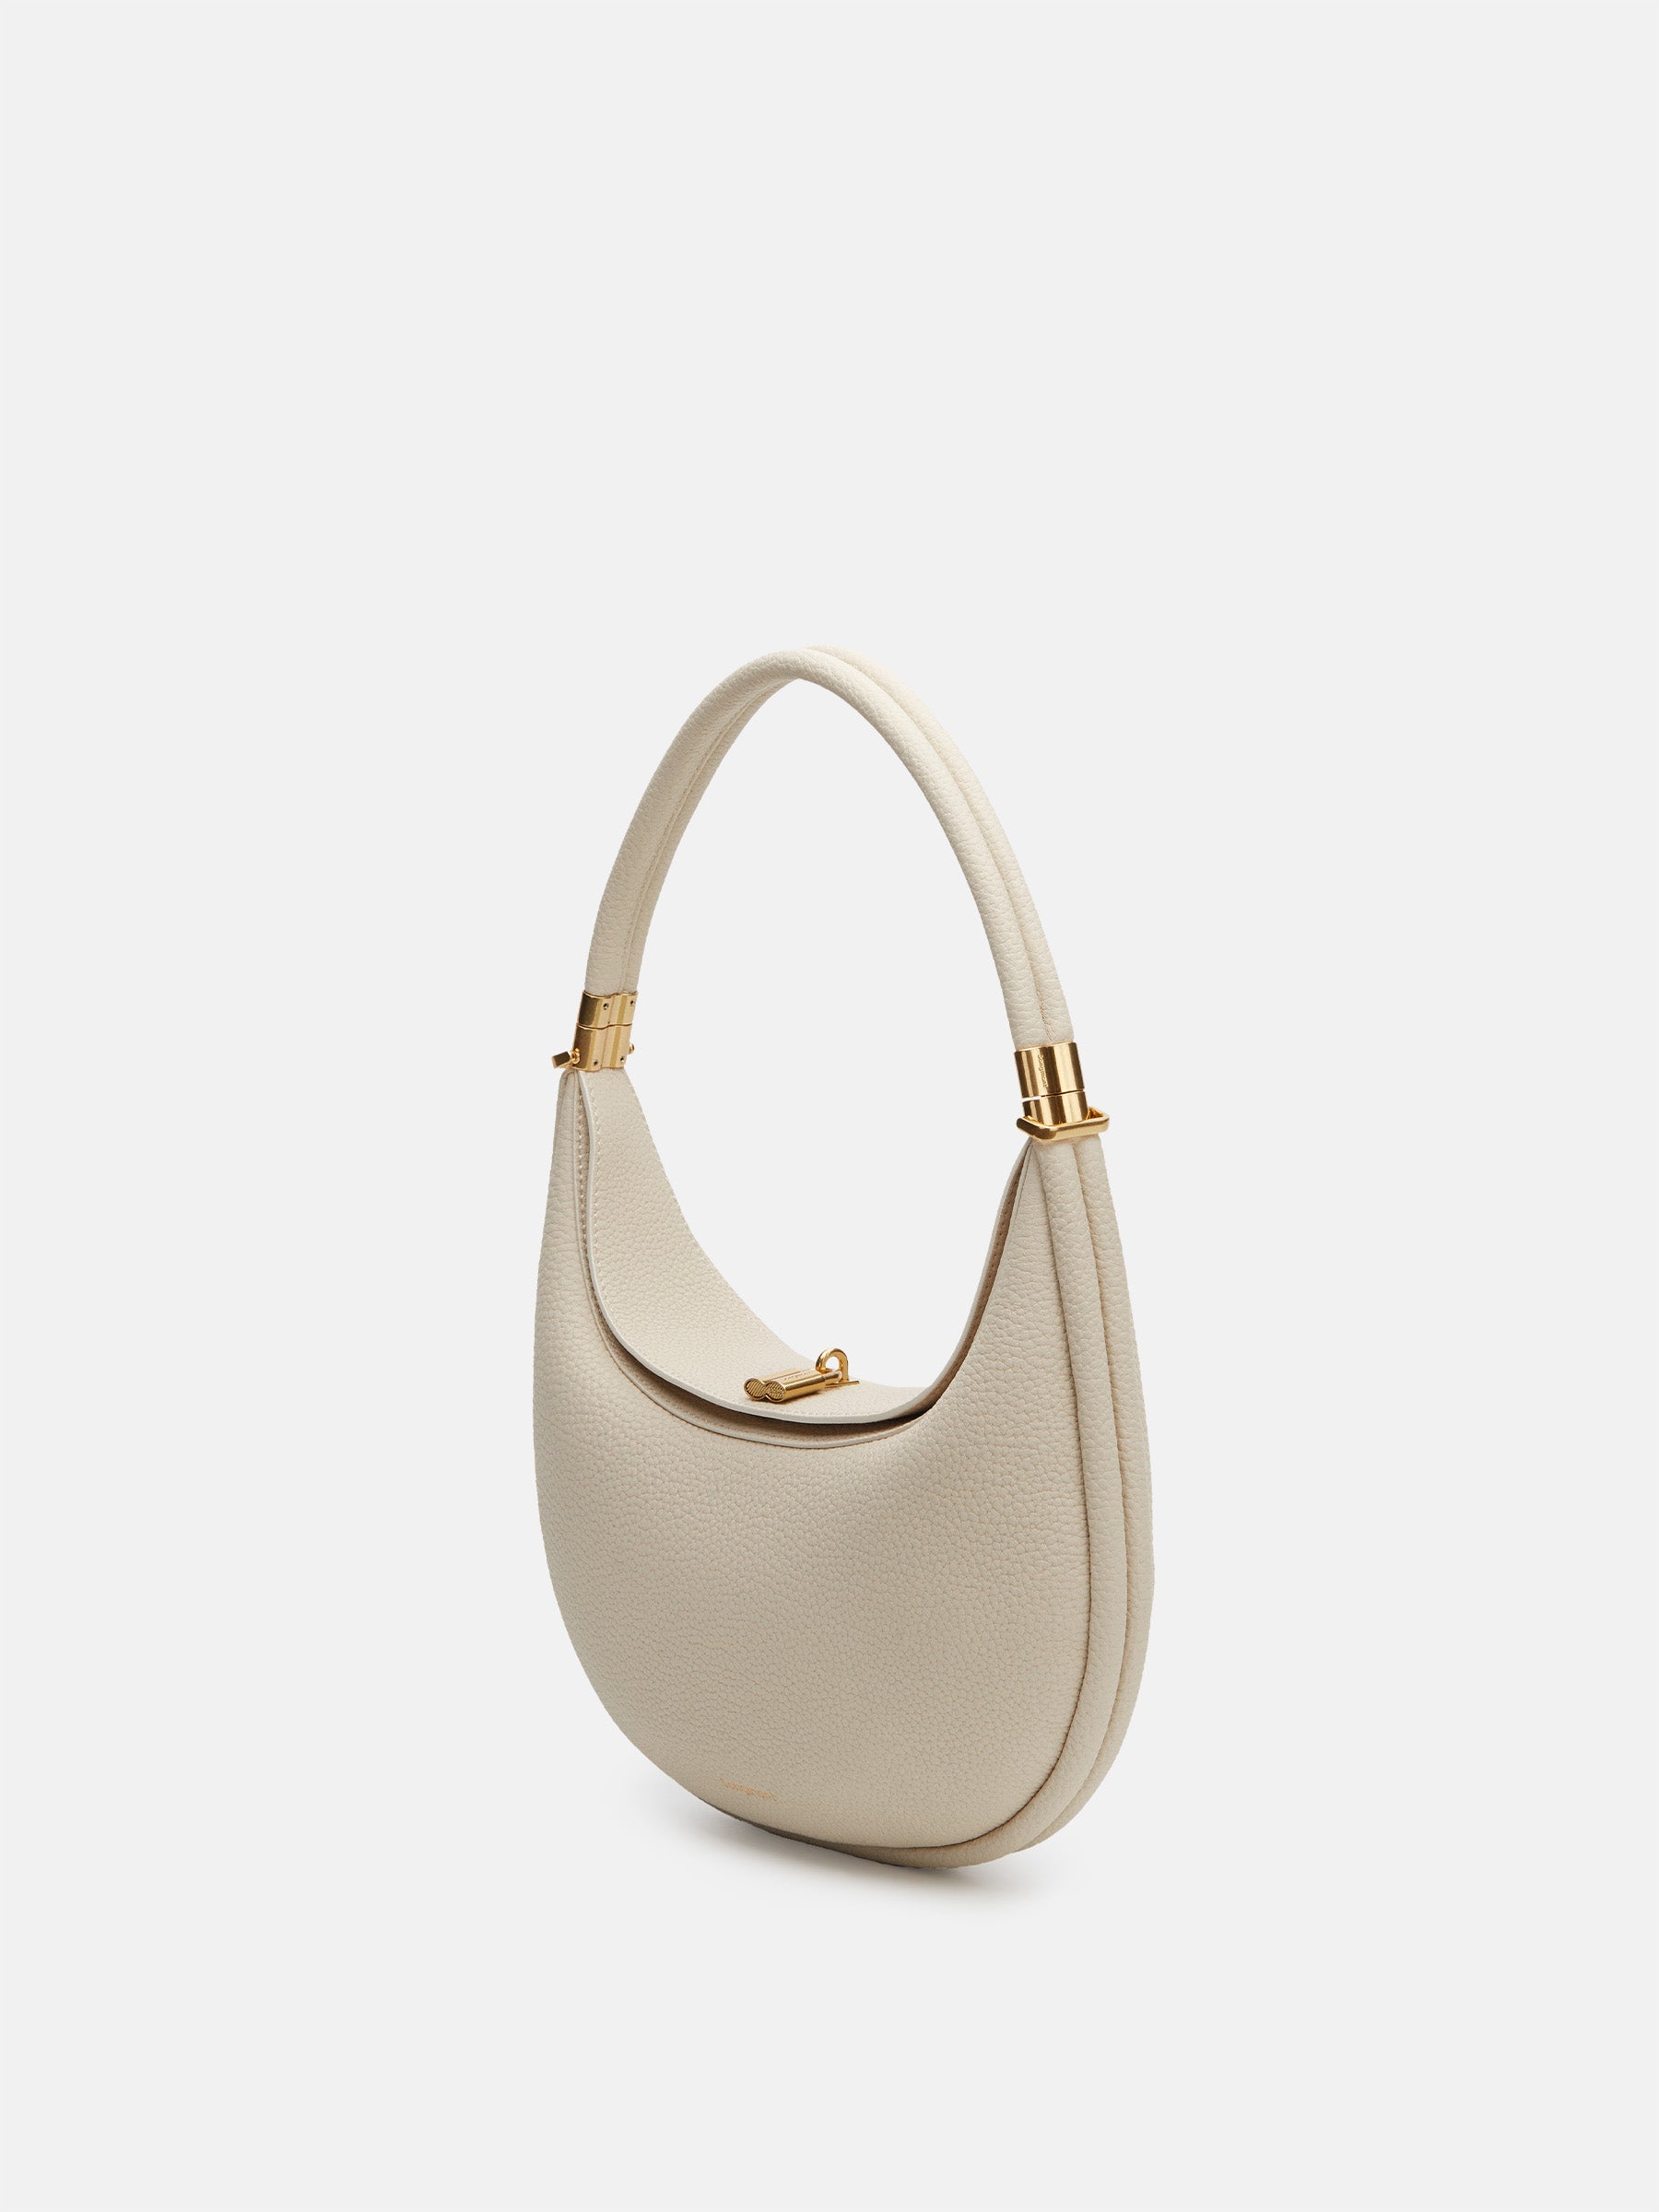 Handbag White New Collection, White, One Size